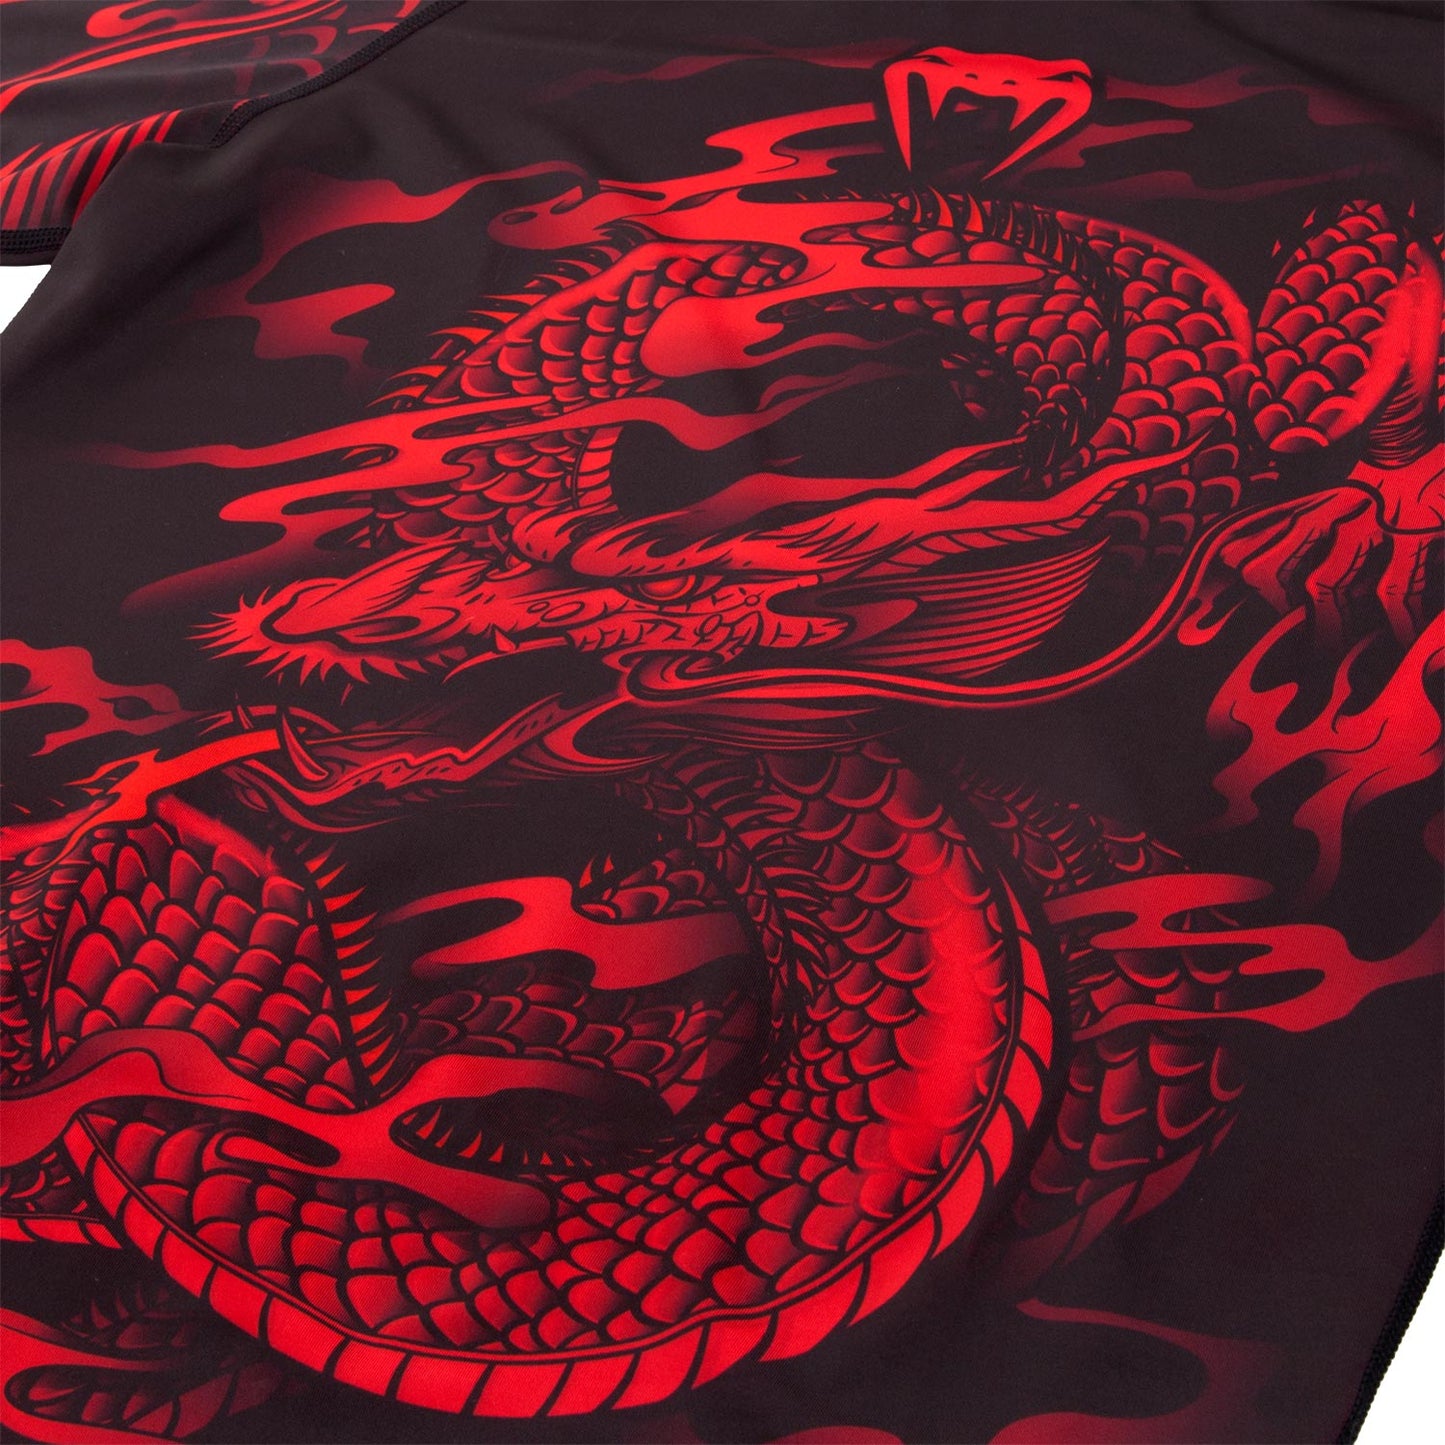 Venum Dragon's Flight Rashguard - Short Sleeves - Black/Red